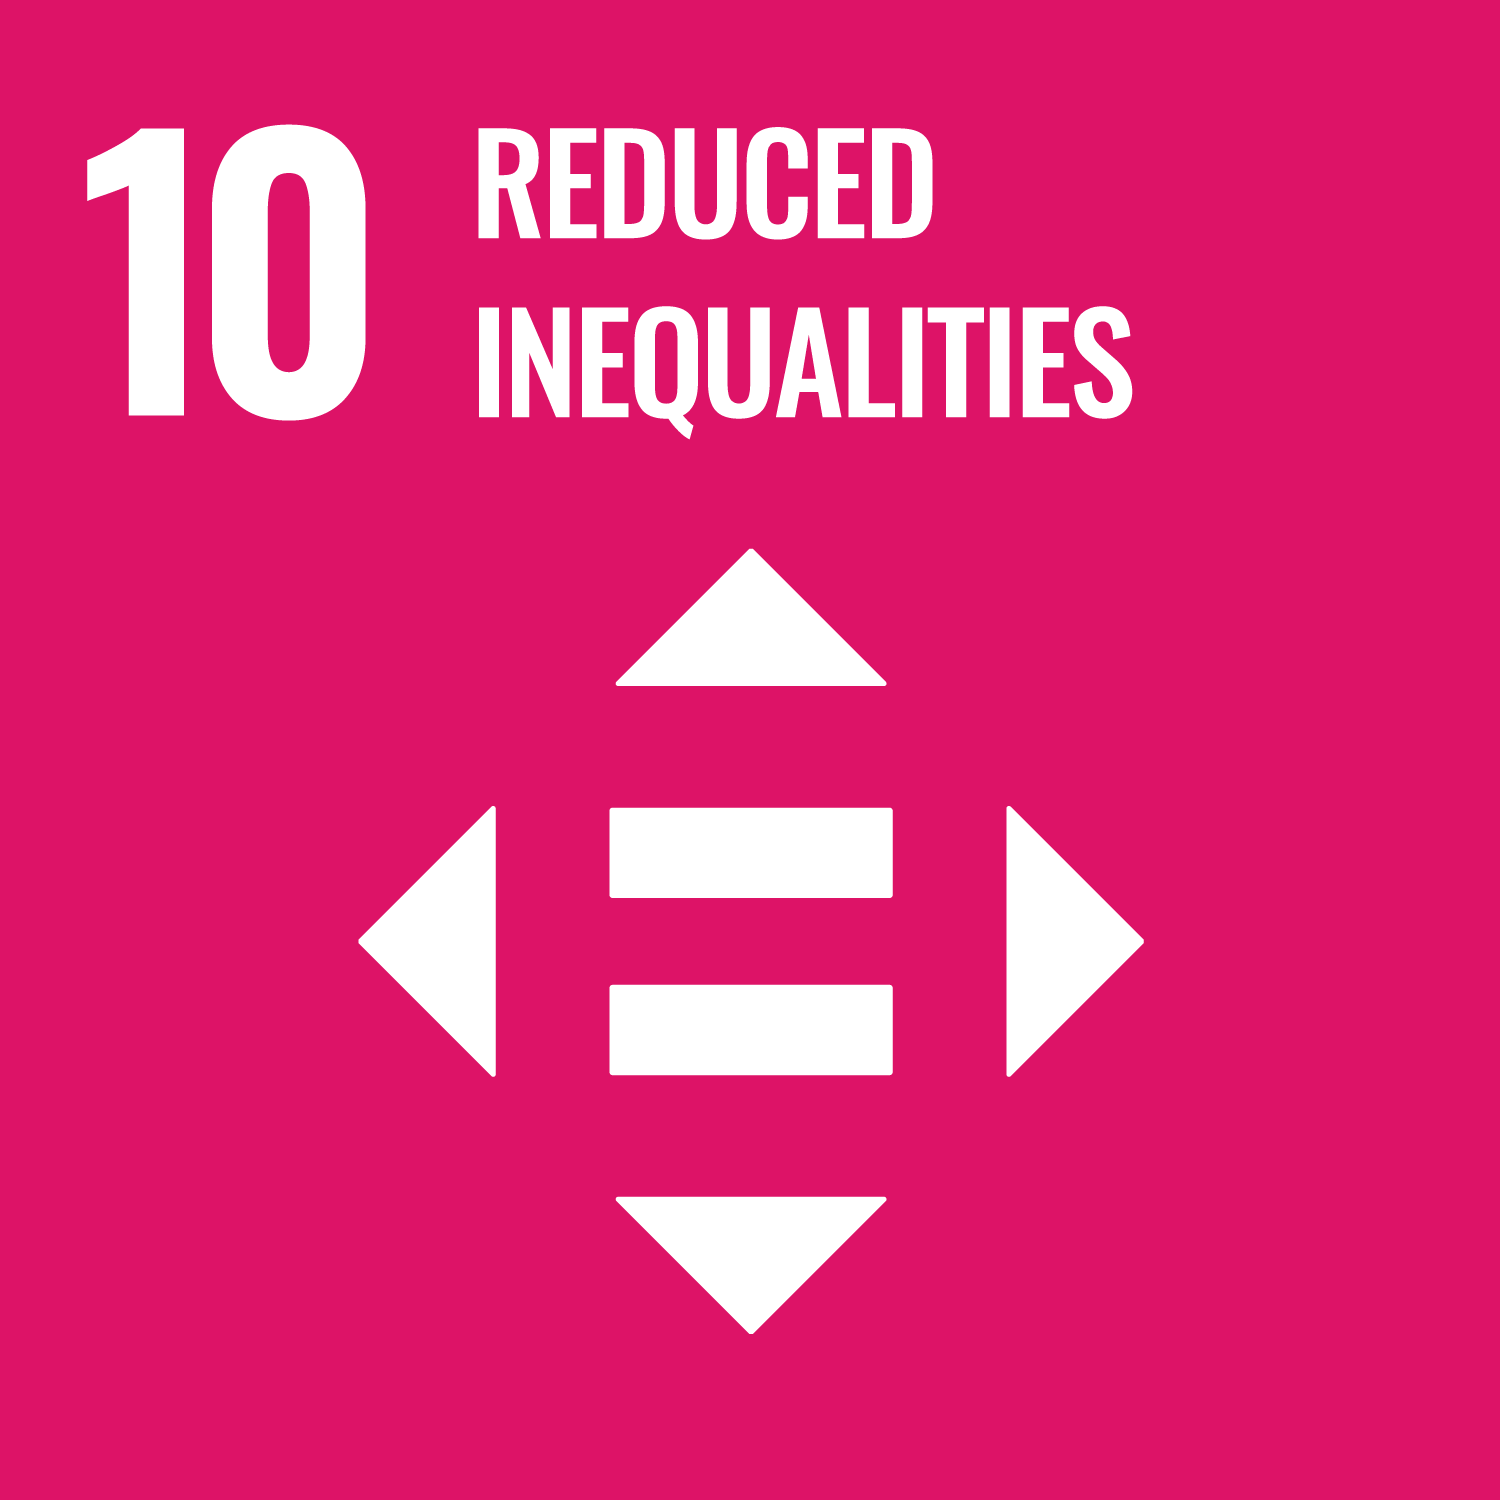 UN sustainable development goal 10 reduced inequalities